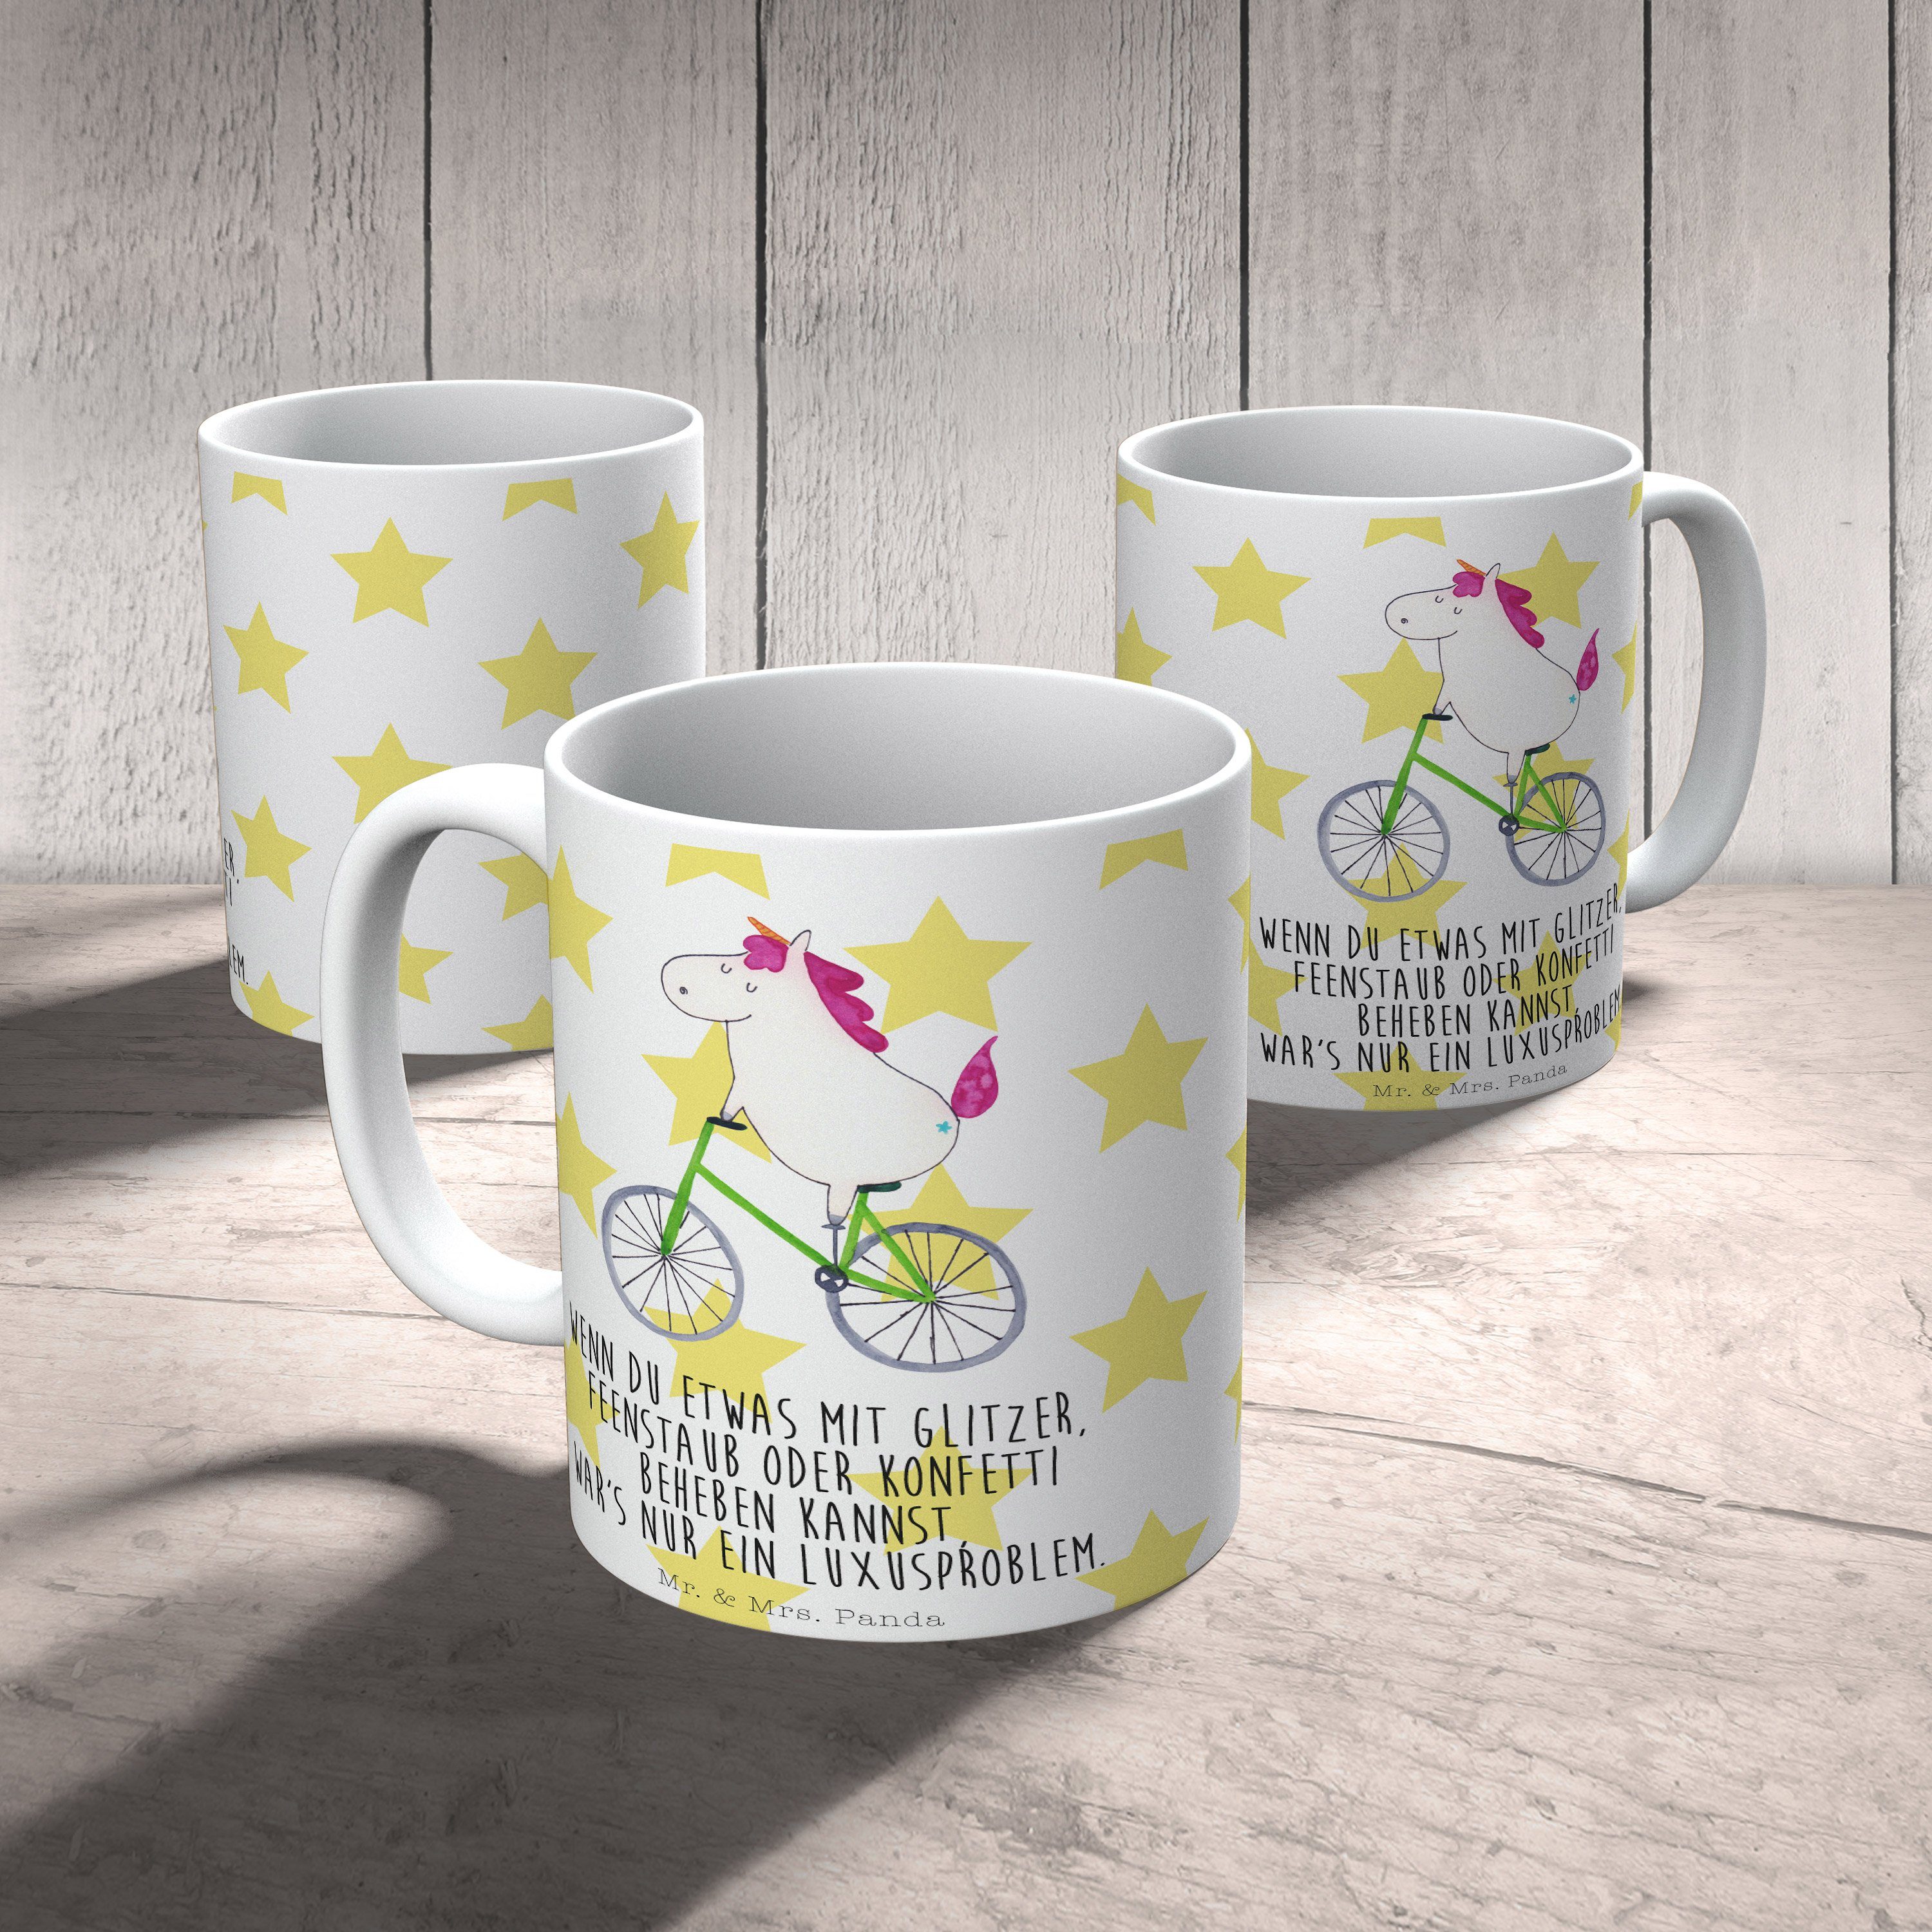 Kummer, Panda Mrs. Unicorn, Mr. Keramik Ei, Radfahrer - Kaffeetasse, Weiß - Tasse Einhorn Geschenk, &